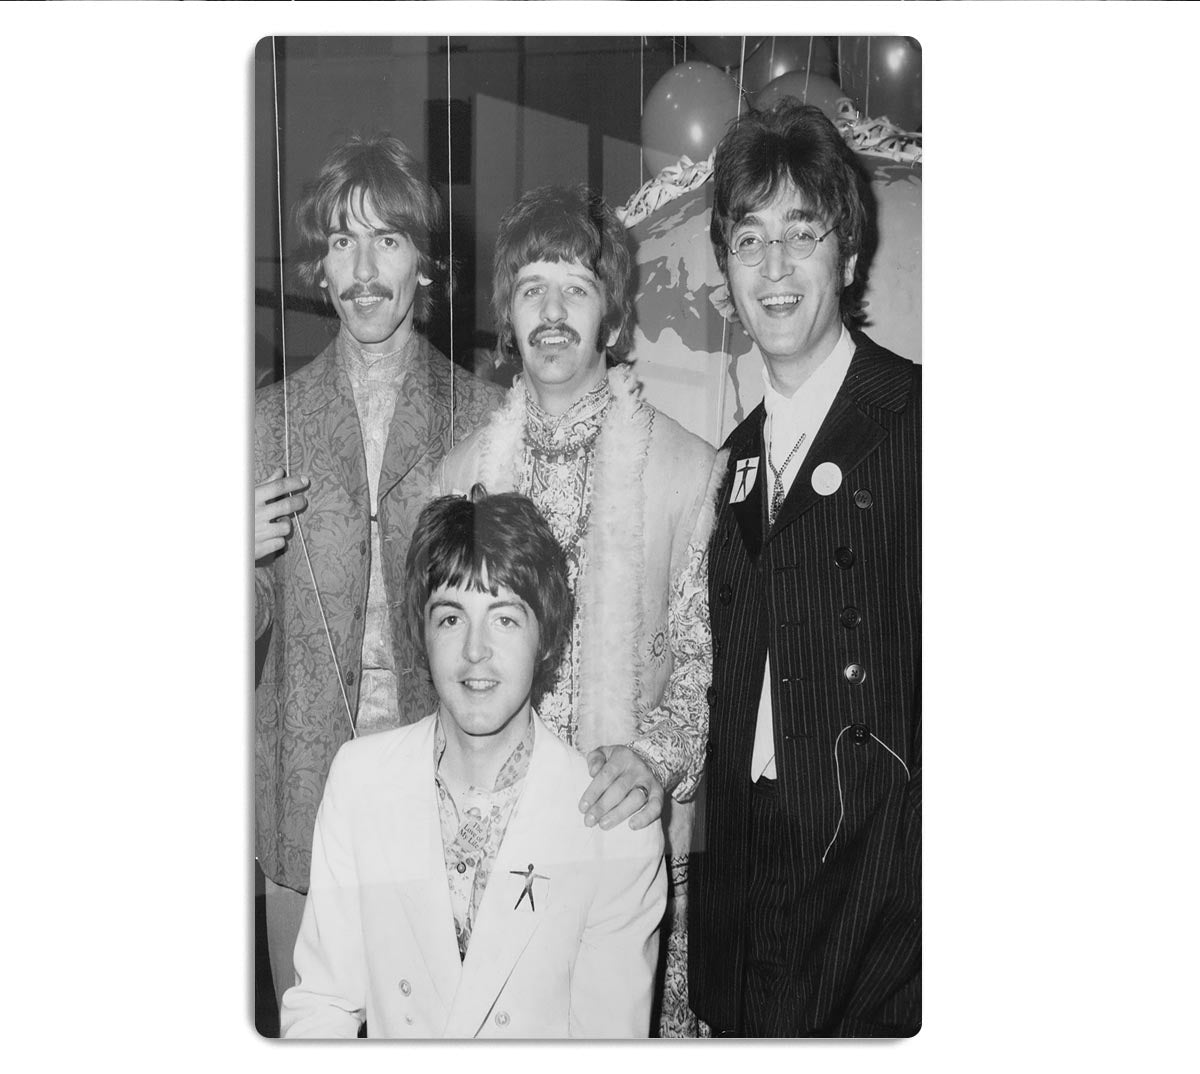 The Beatles at Abbey Road Studios HD Metal Print